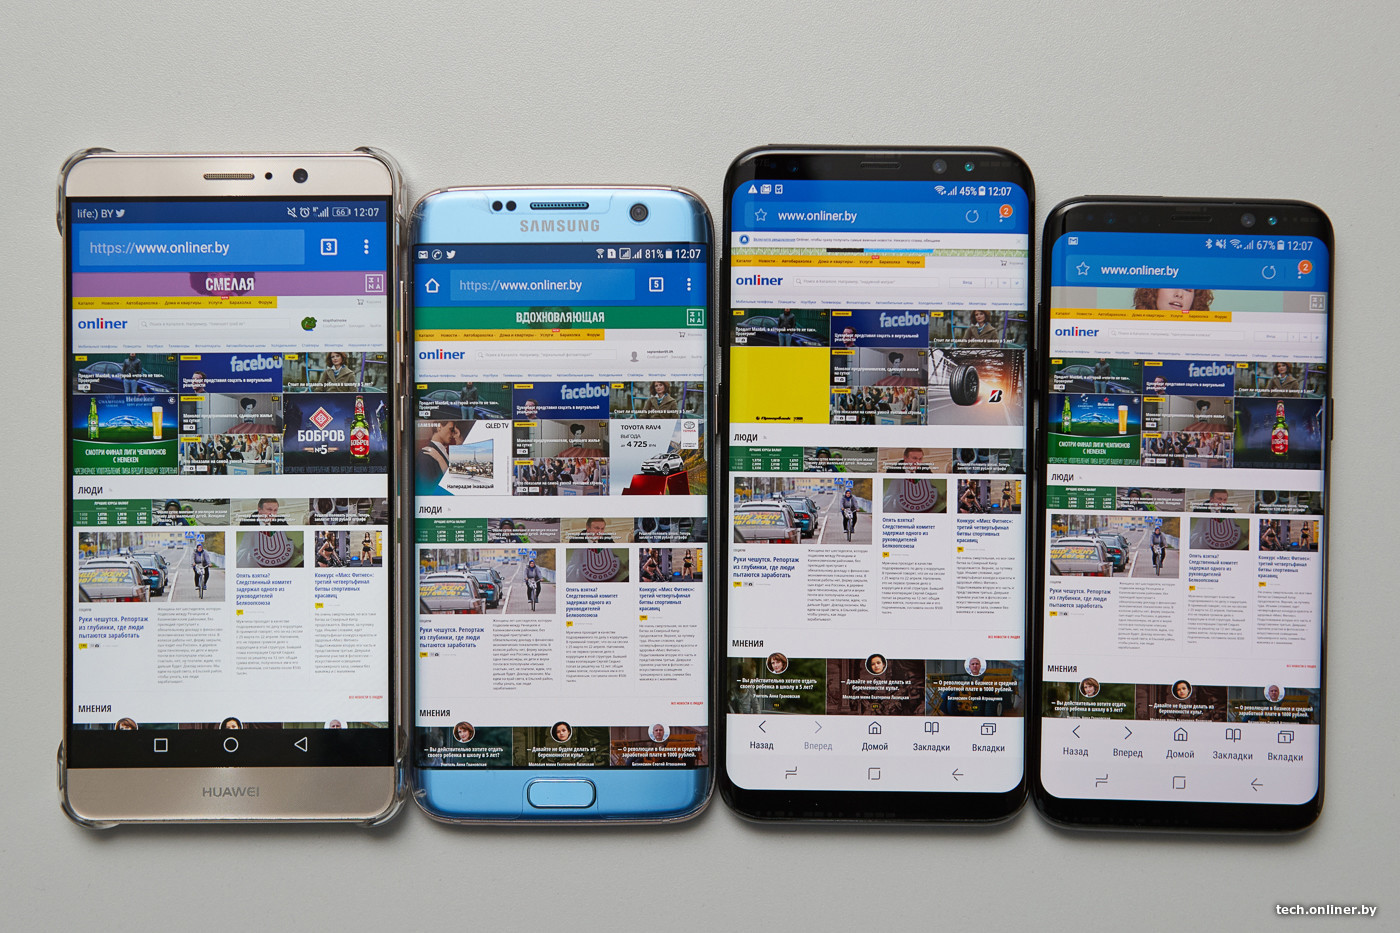 Обзор: «Безграничный» Samsung Galaxy S8